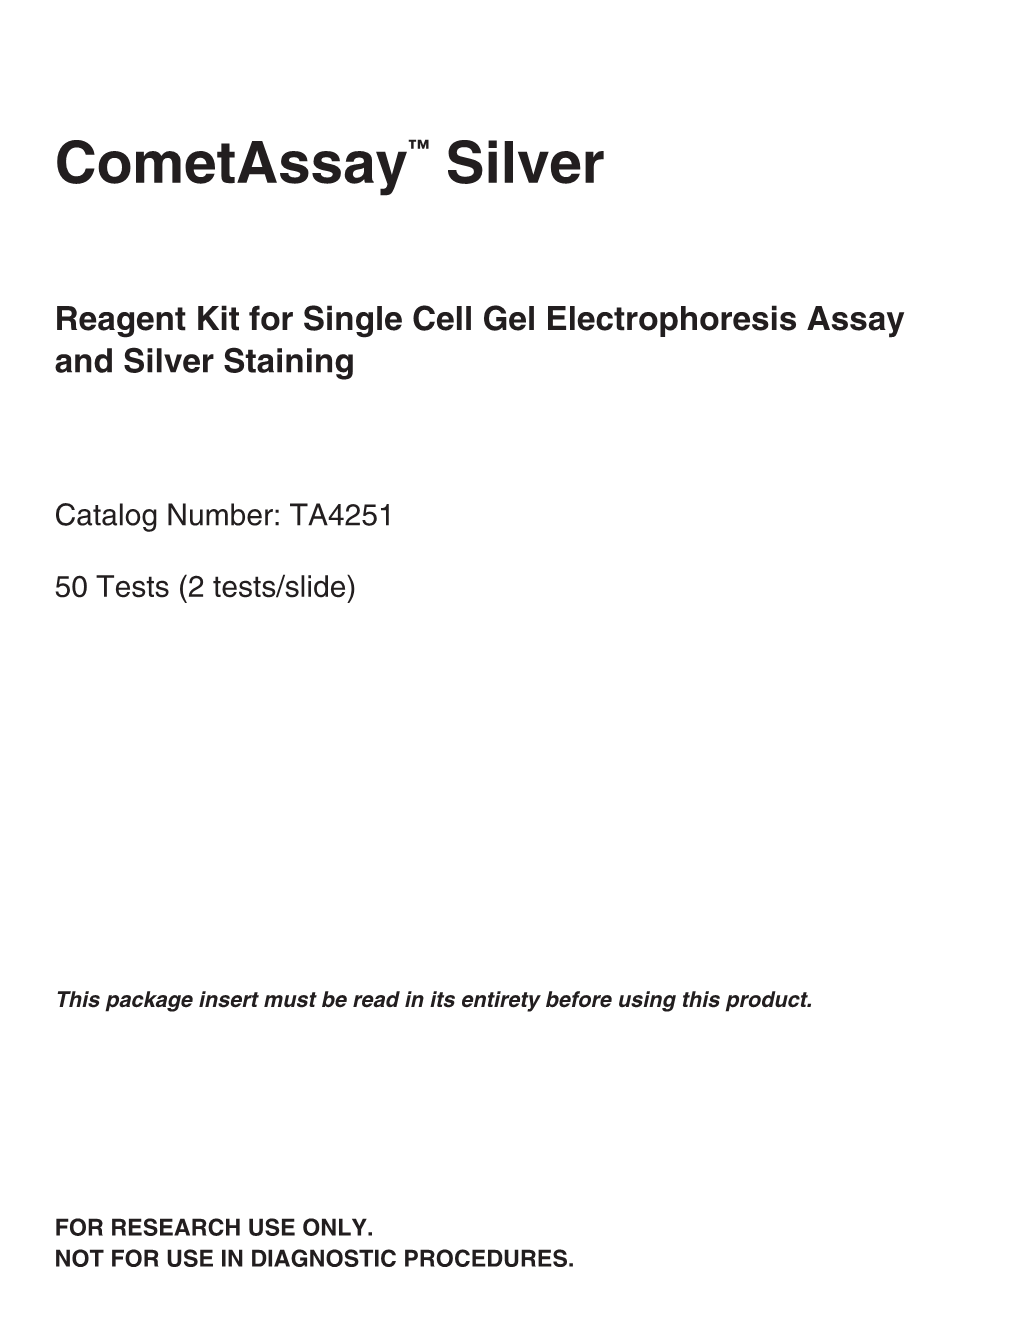 Cometassay Single Cell Gel Electrophoresis Assay-Silver